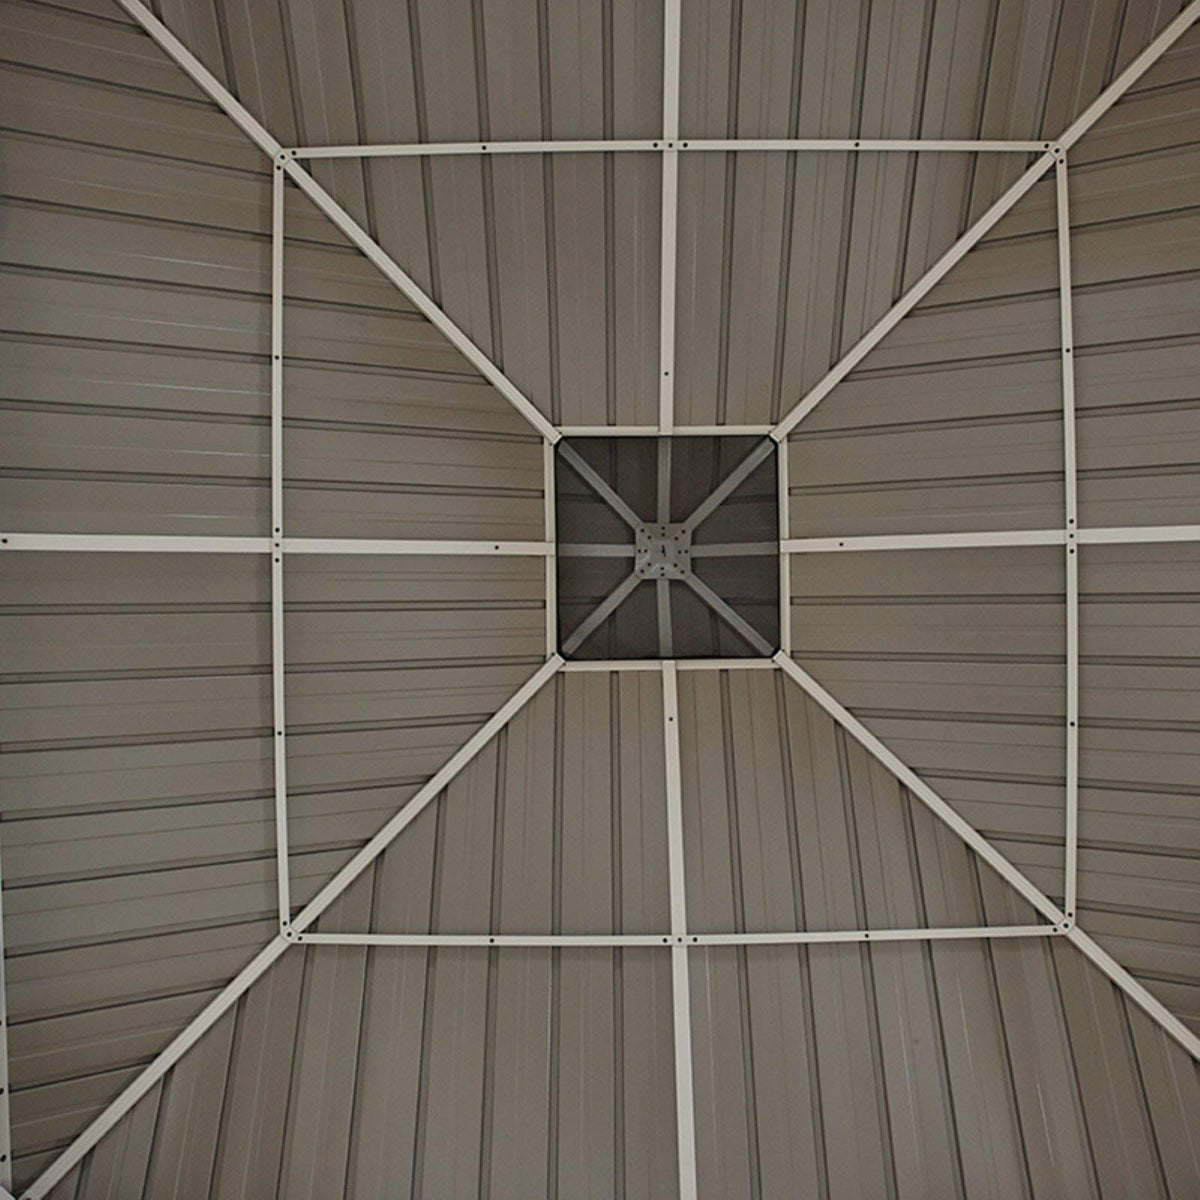 Messina # 43L Sun Shelter 12'x12 'Galvanized Steel roof, mesh Screen